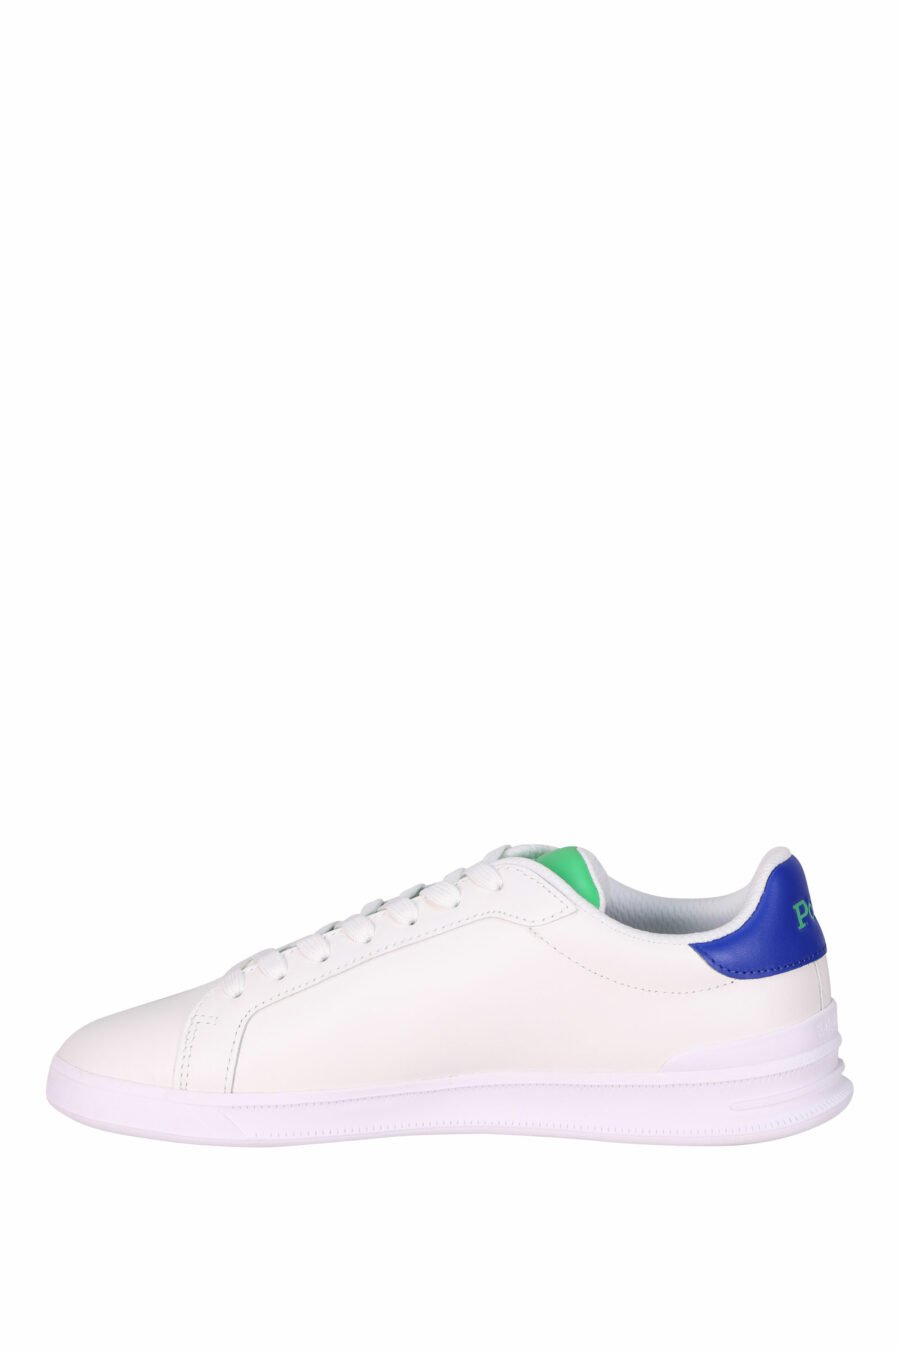 Zapatillas blancas con detalle verde y azul con minilogo "polo" - 3616535905740 2